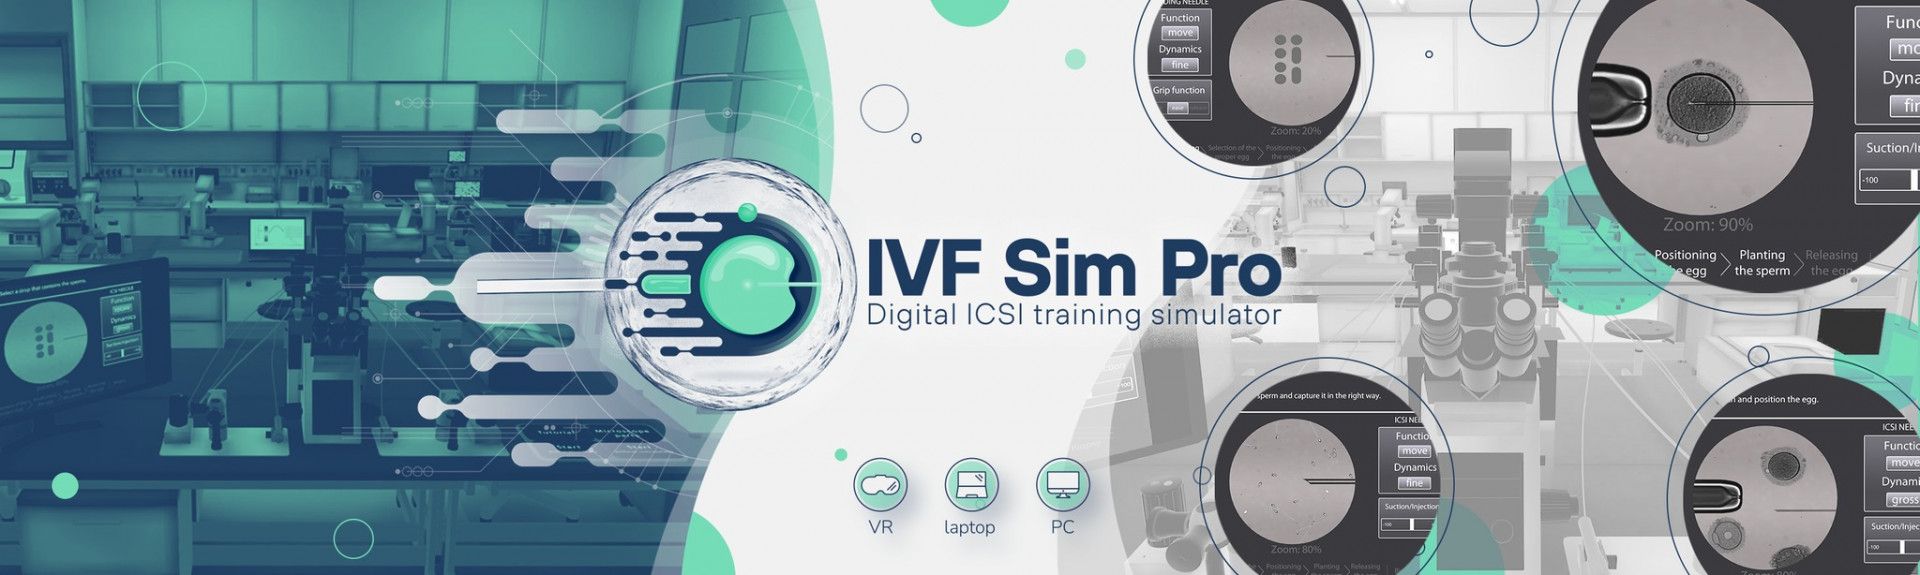 IVF Sim Pro